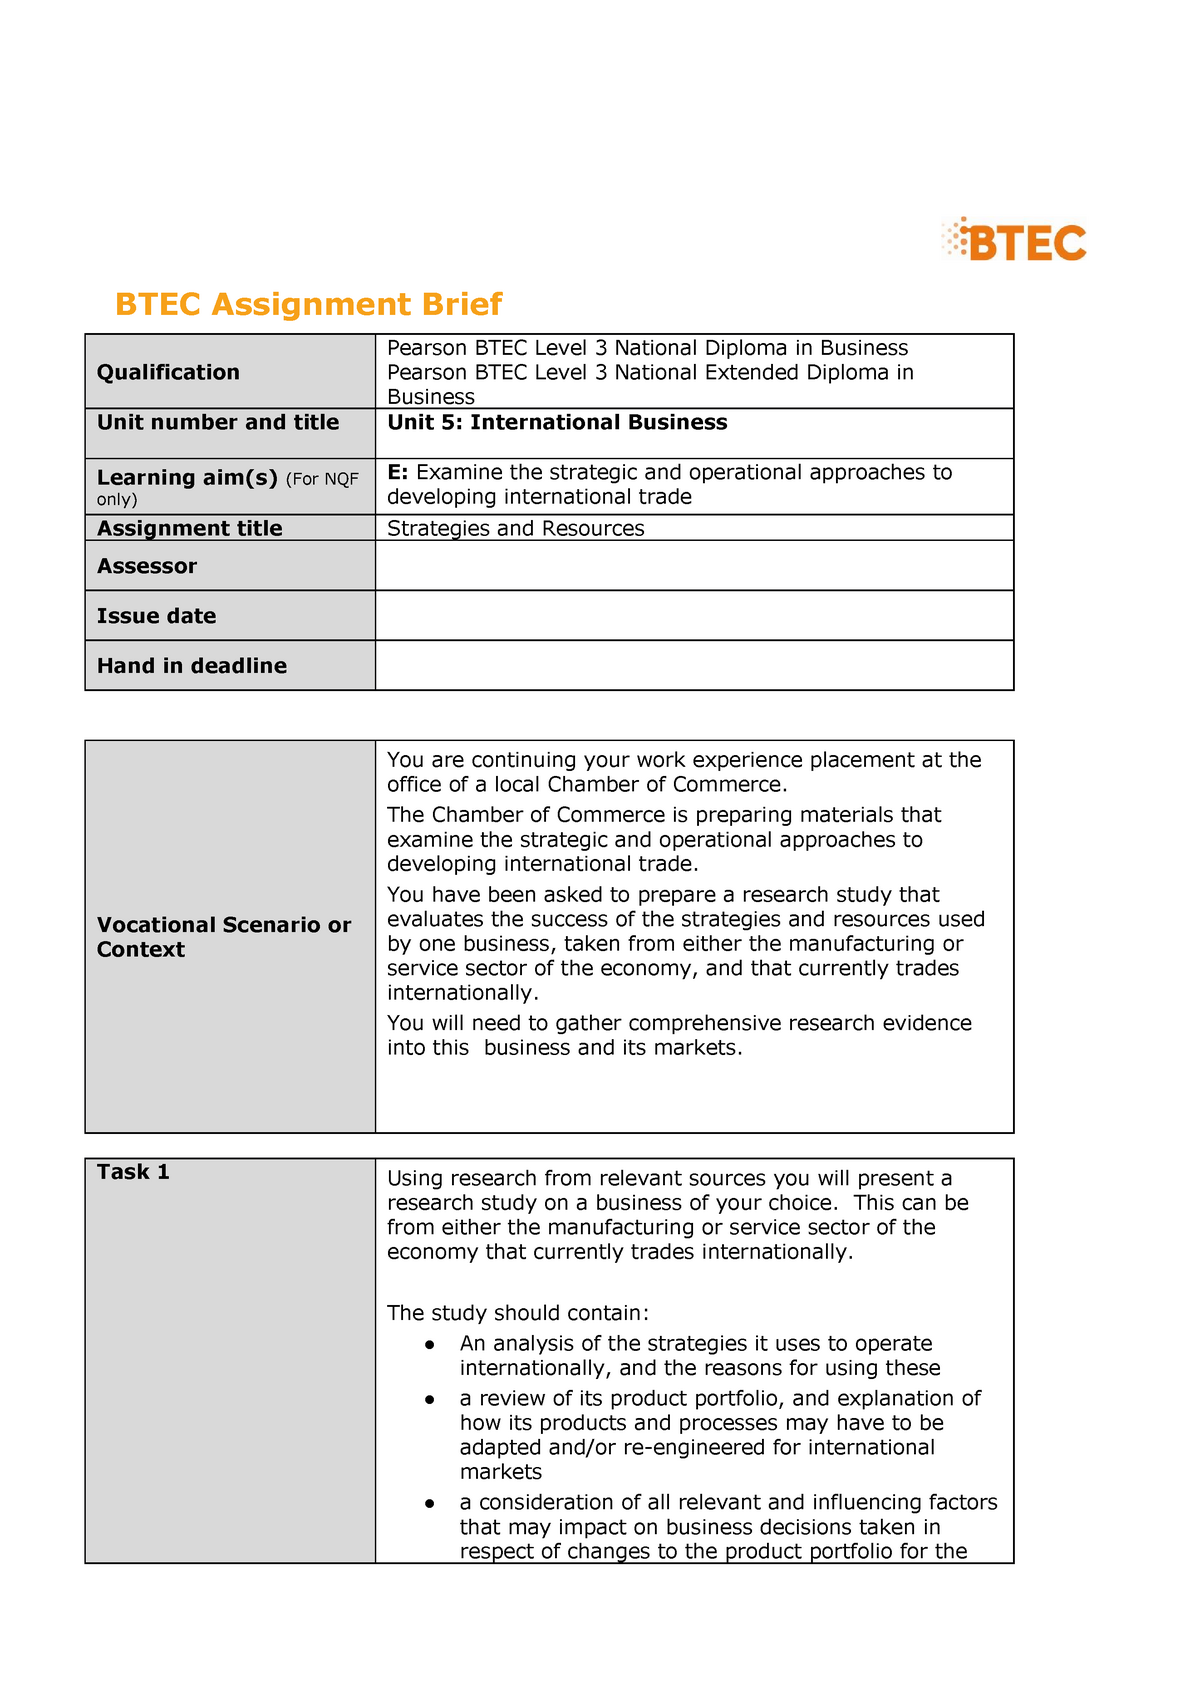 pearson btec authorised assignment briefs